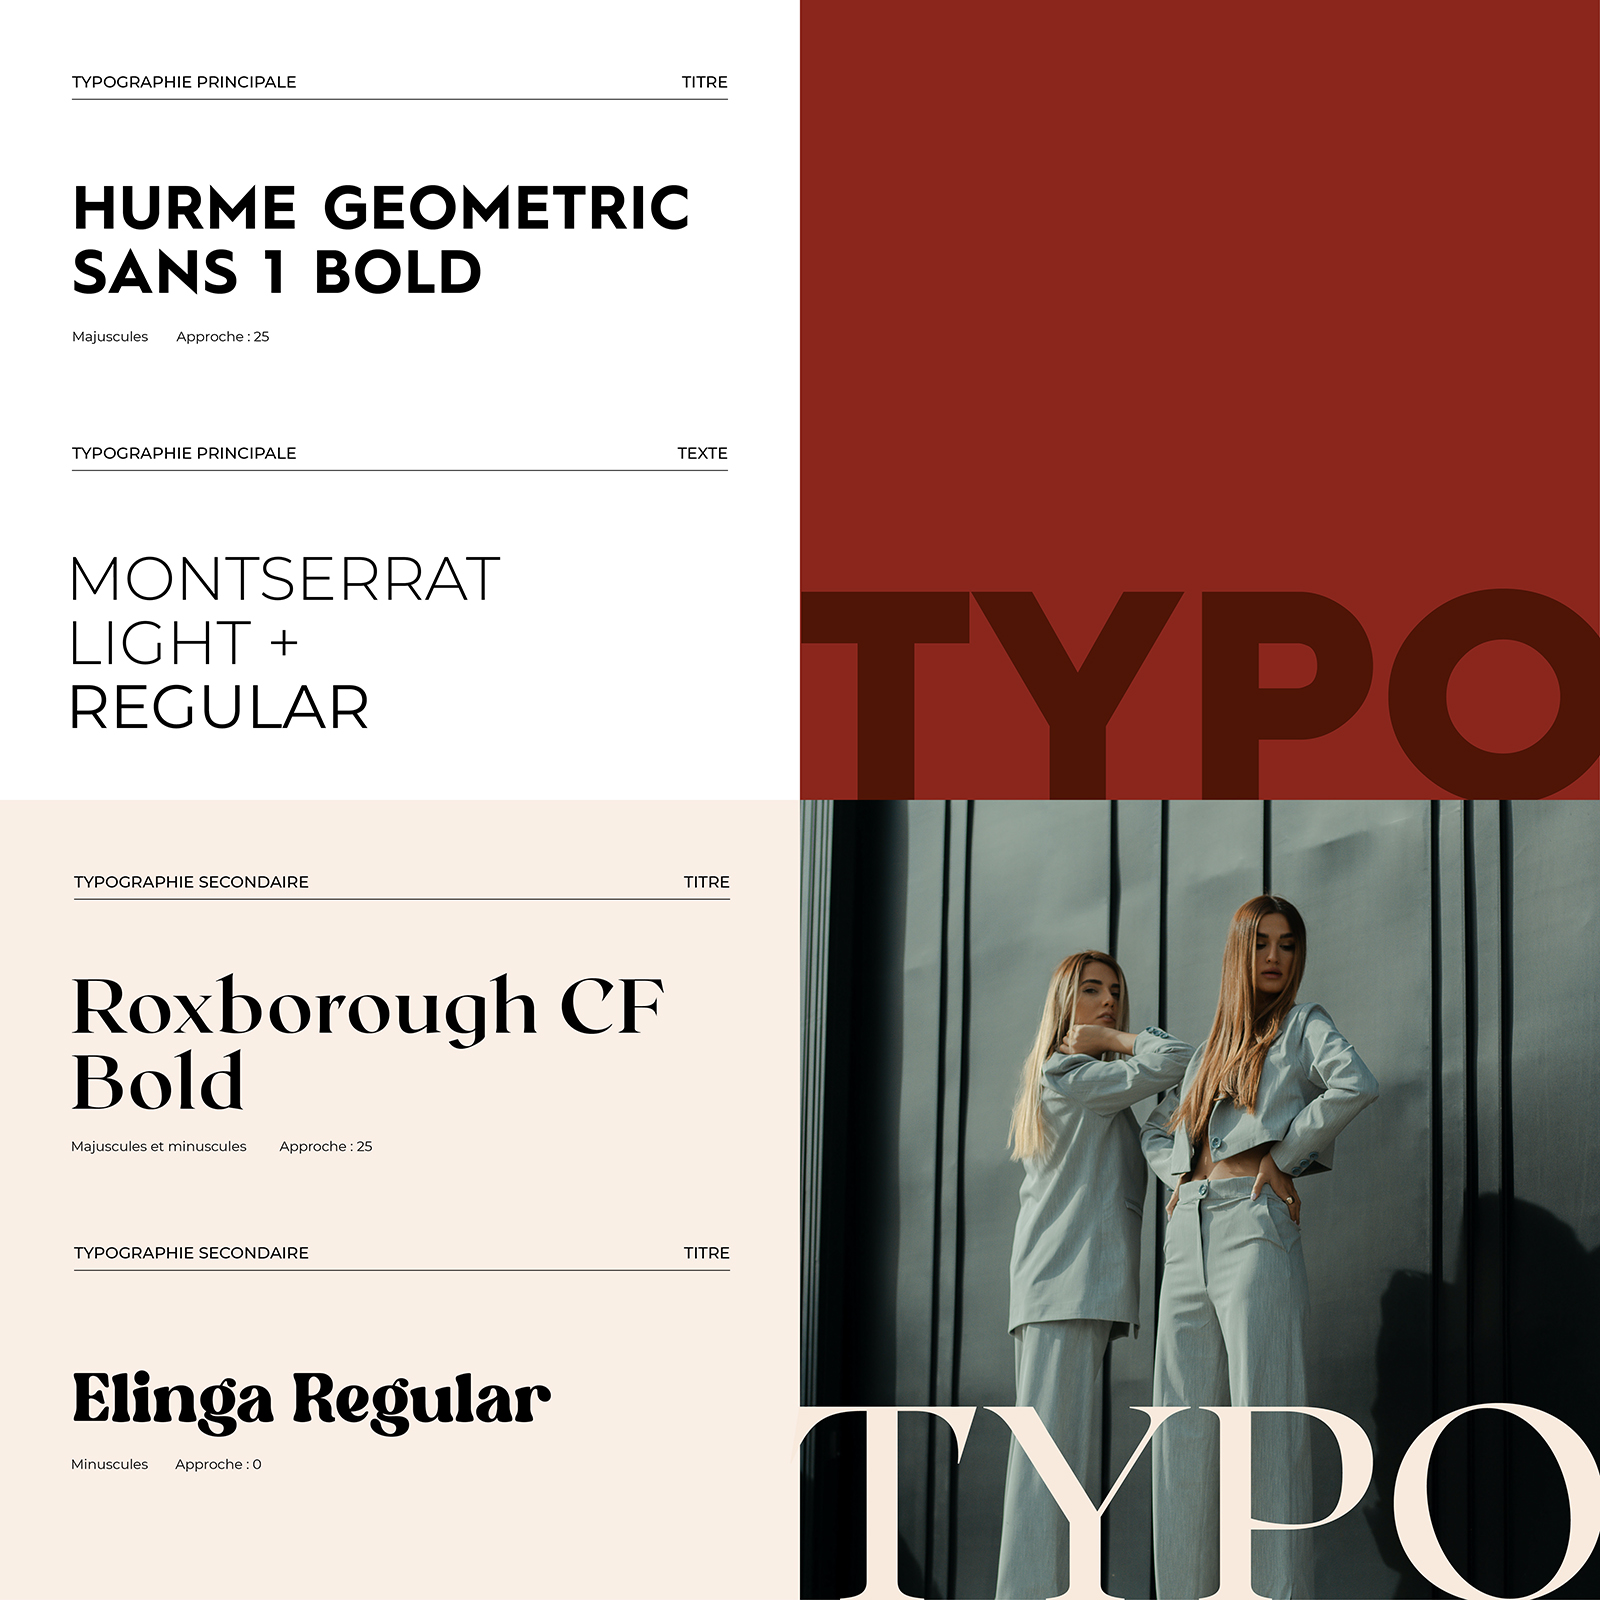 Typographies utilisees univers de marque MACH commercial Hurme geometric montserrat roxborough ellinga